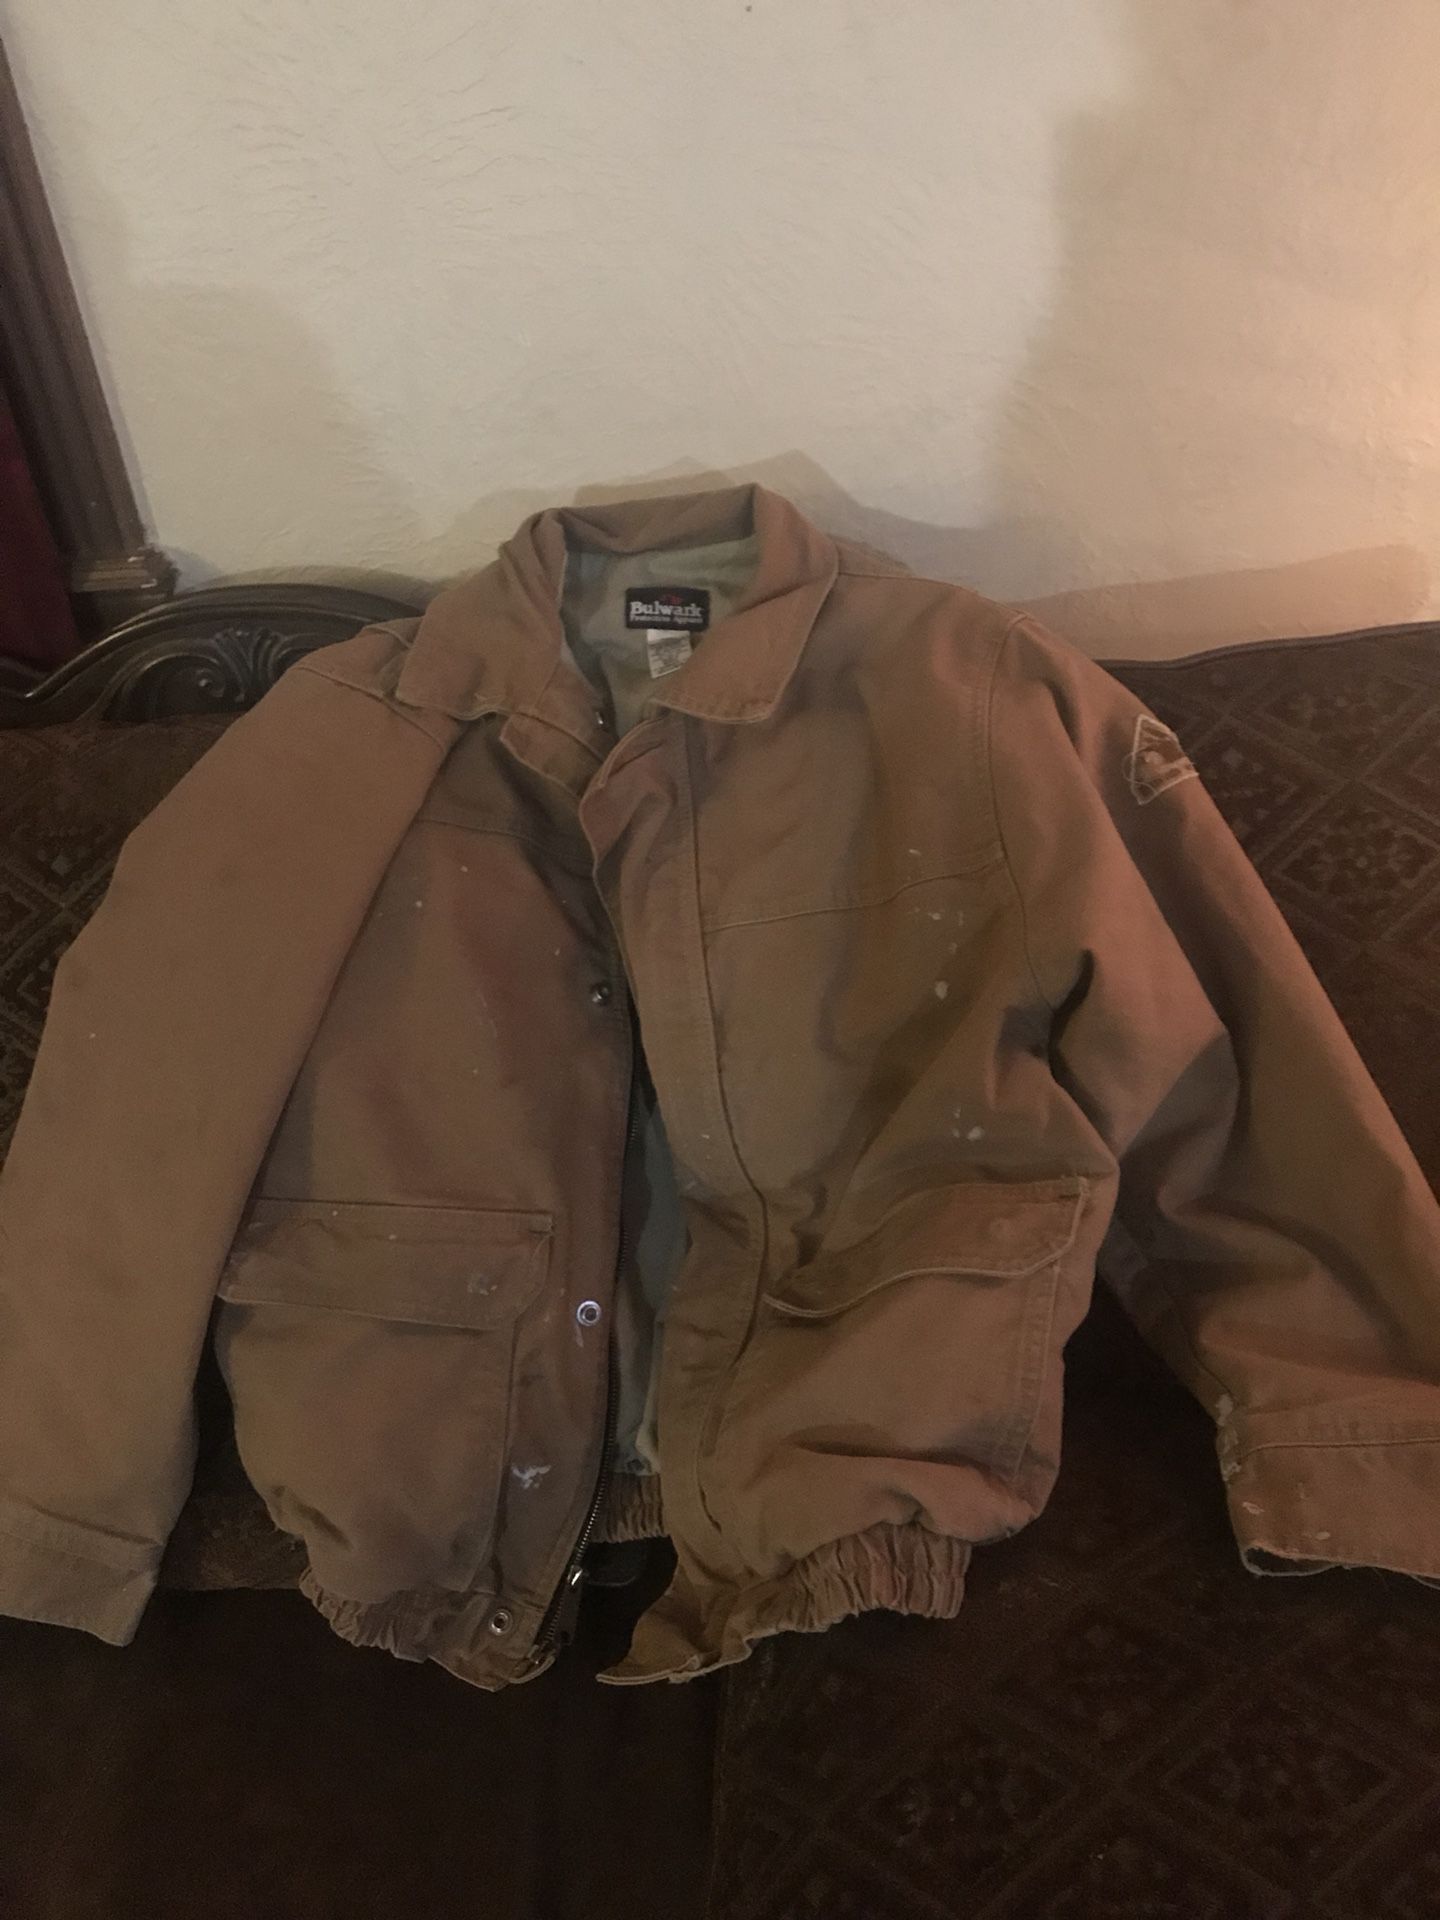 FR jacket size M $60